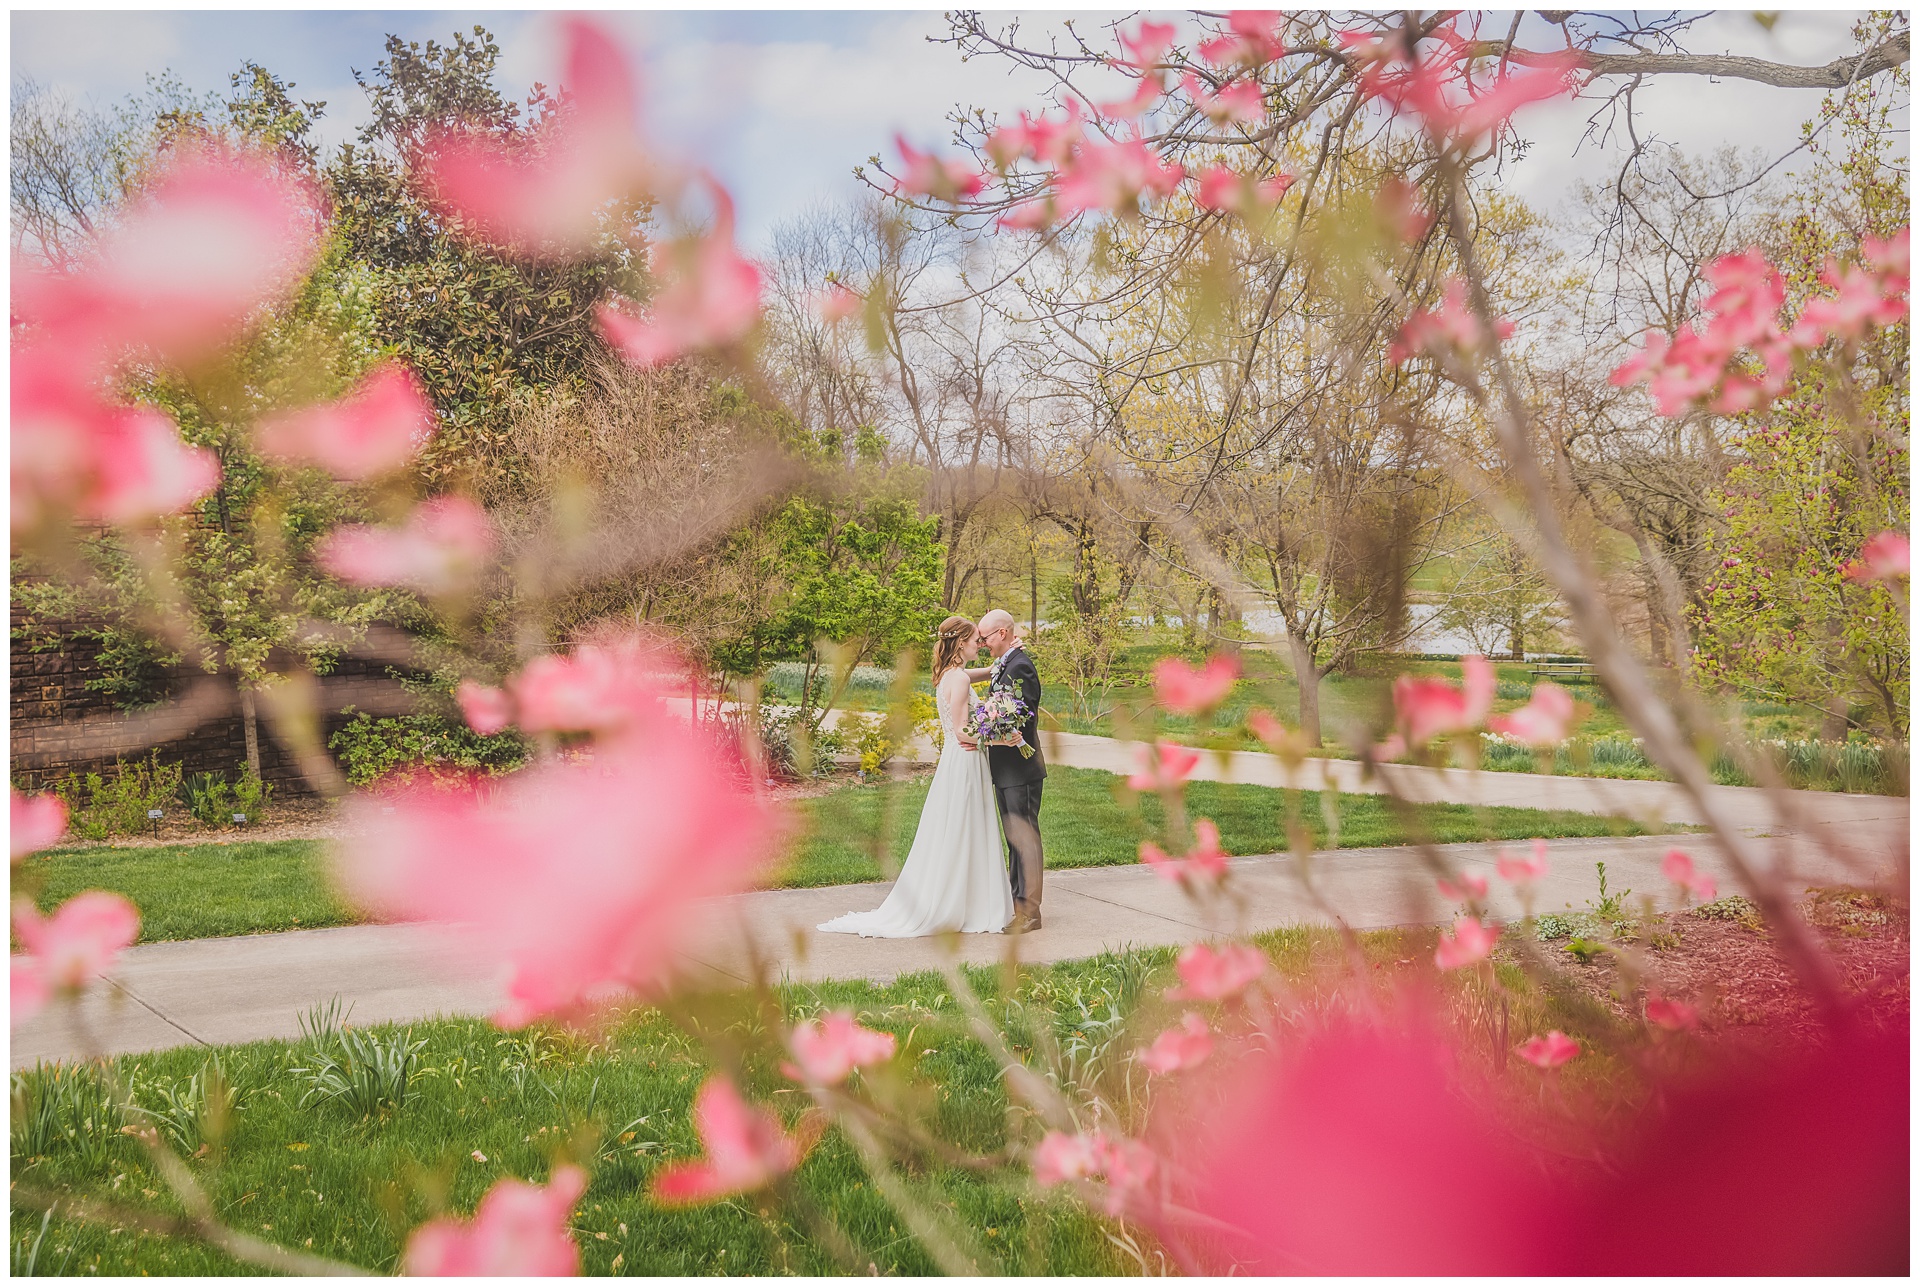 Wedding photography at Powell Gardens in Kingsville, Missouri, by Kansas City wedding photographers Wisdom-Watson Weddings.